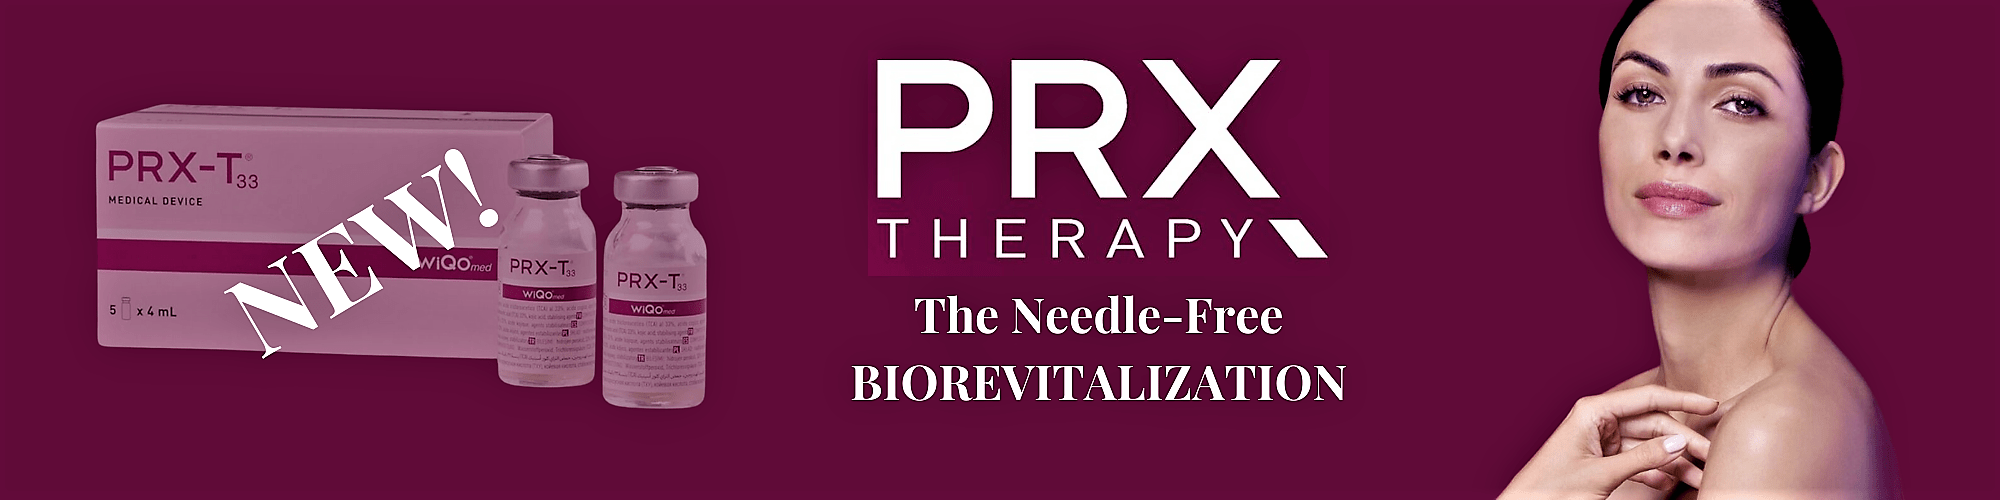 prx-T33 Biorevitalization treatment without needle.